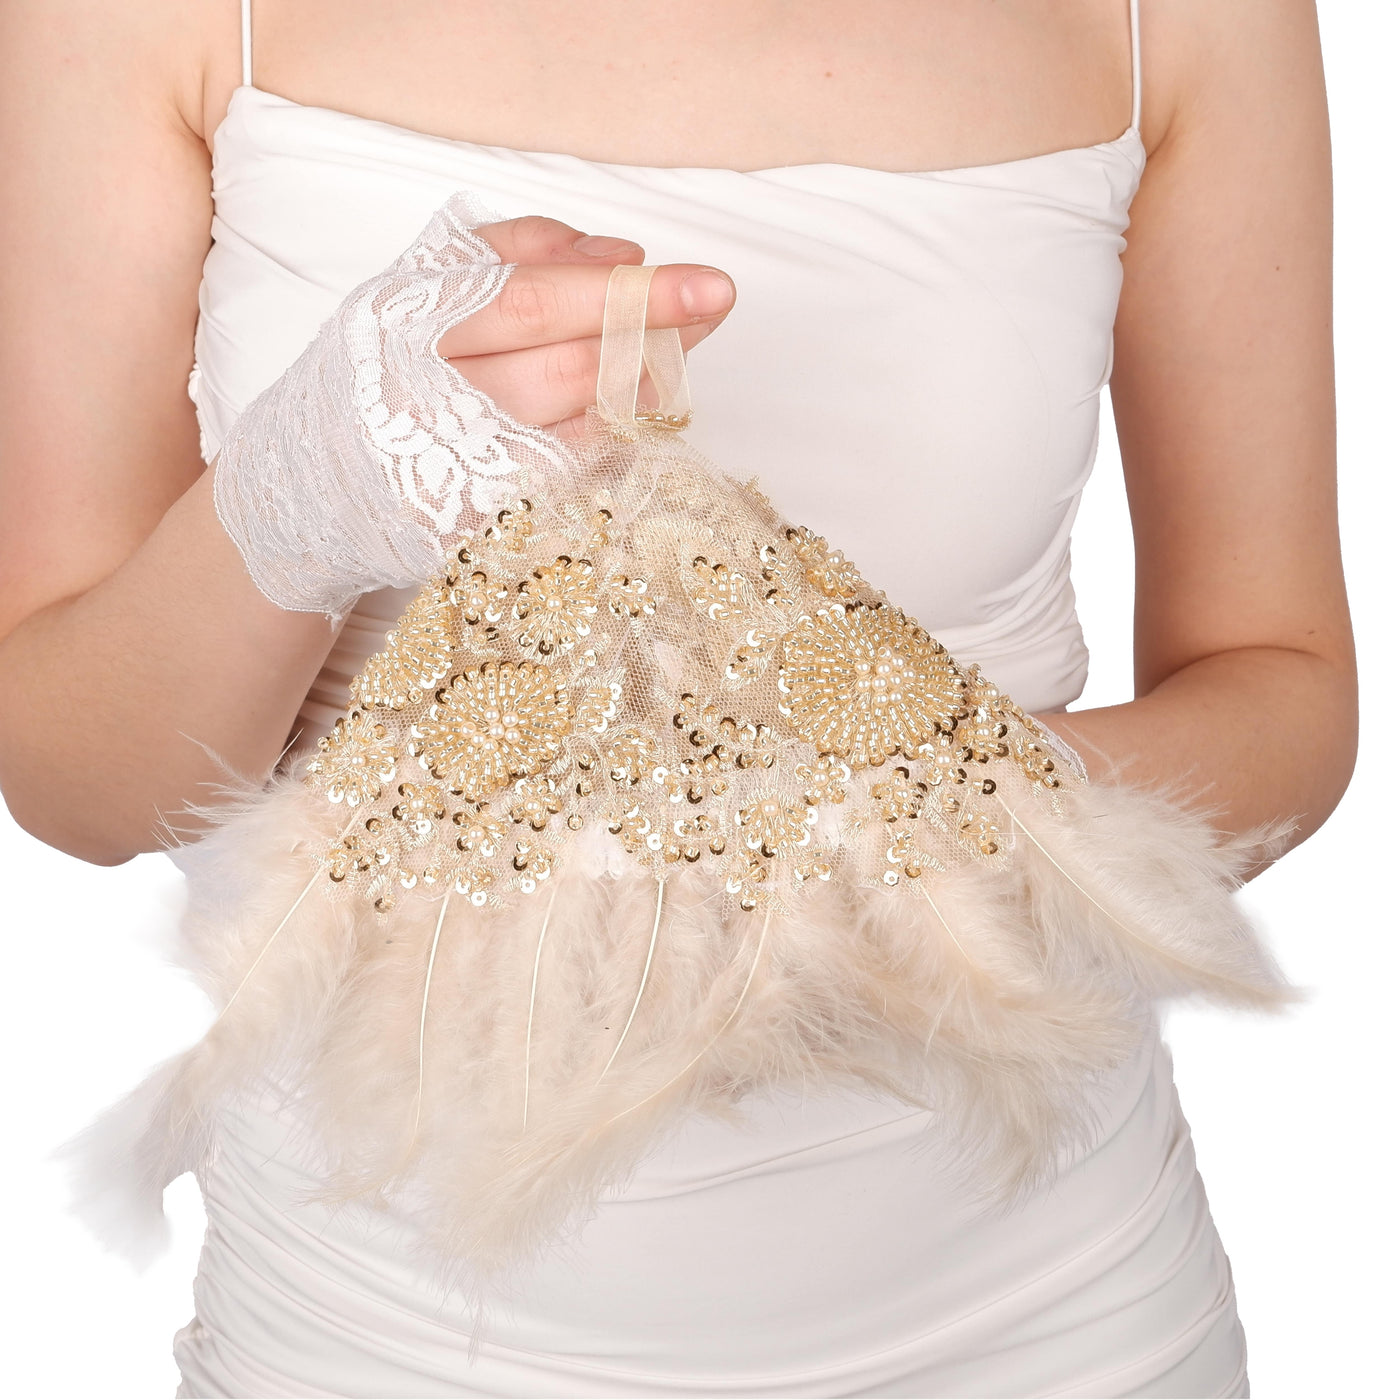 Lace Detailed Feather Bridal Wedding Handkerchief Organization Party Handkerchief 1 Pcs